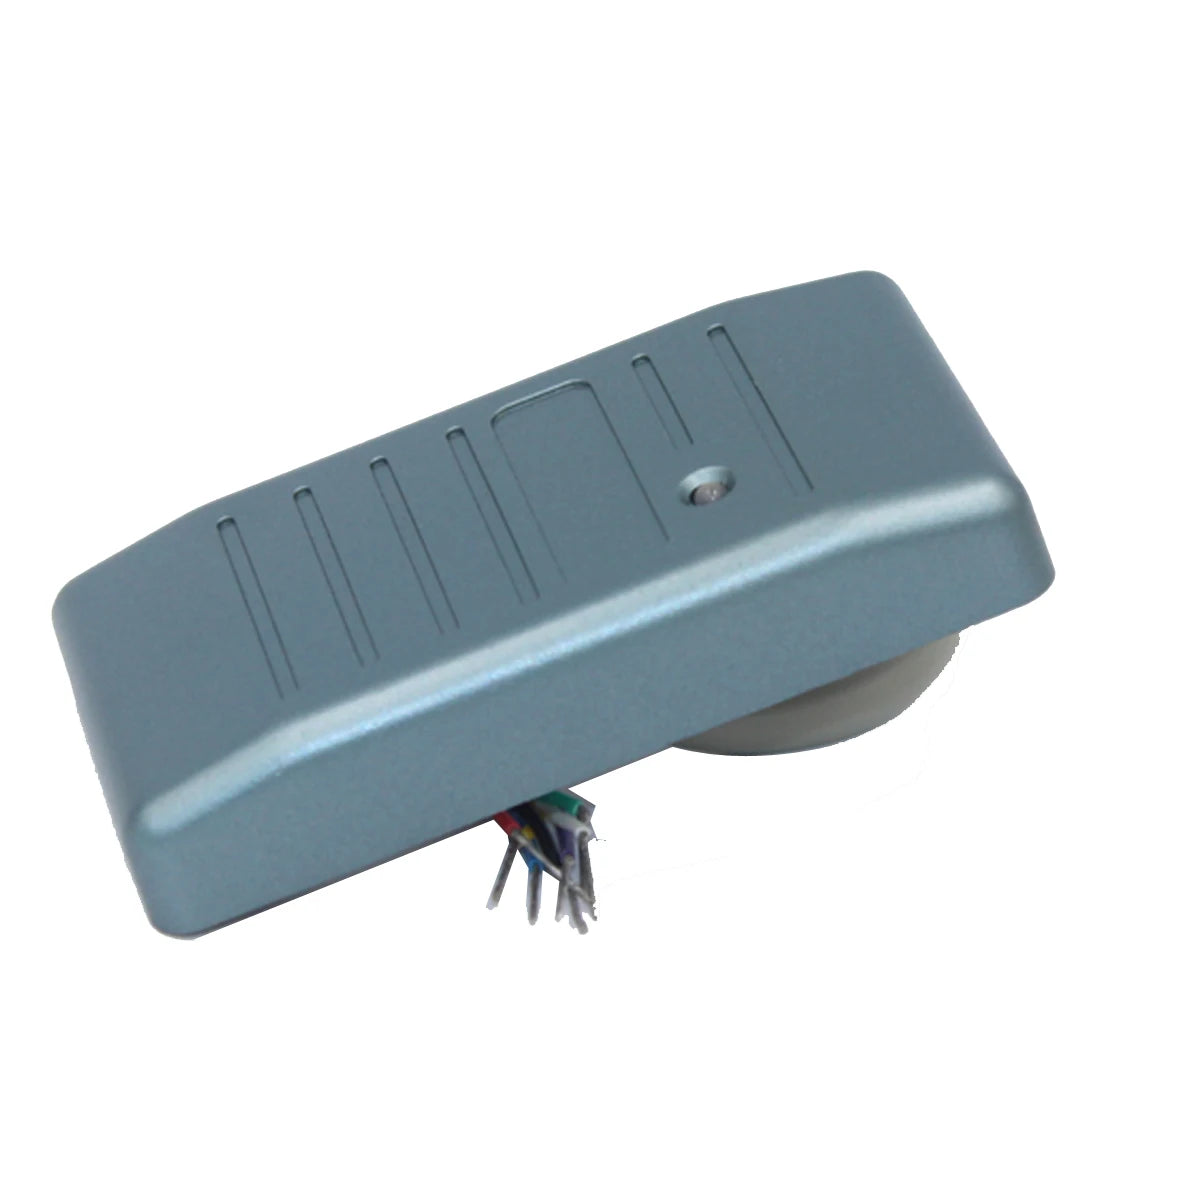 Waterproof 125khz RFID Card Reader Wiegand 26/34  Card Reader LED Indicators Security  Access Control Reader